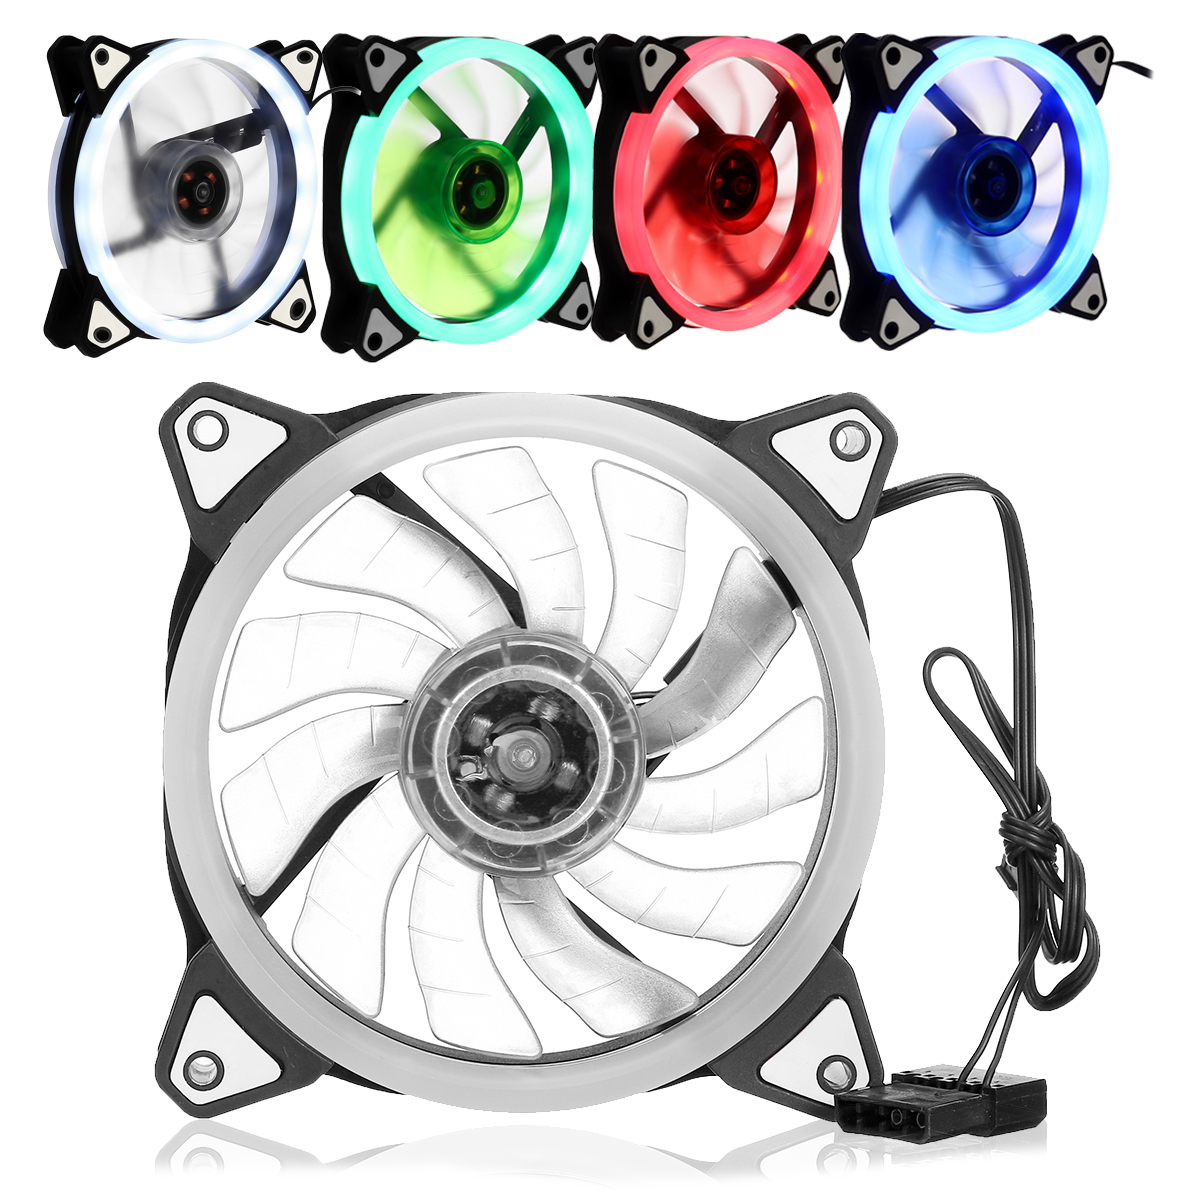 

120mm PC Computer Case Fan Cooler Cooling Heatsink Ultra Silent 4 Color LED Light